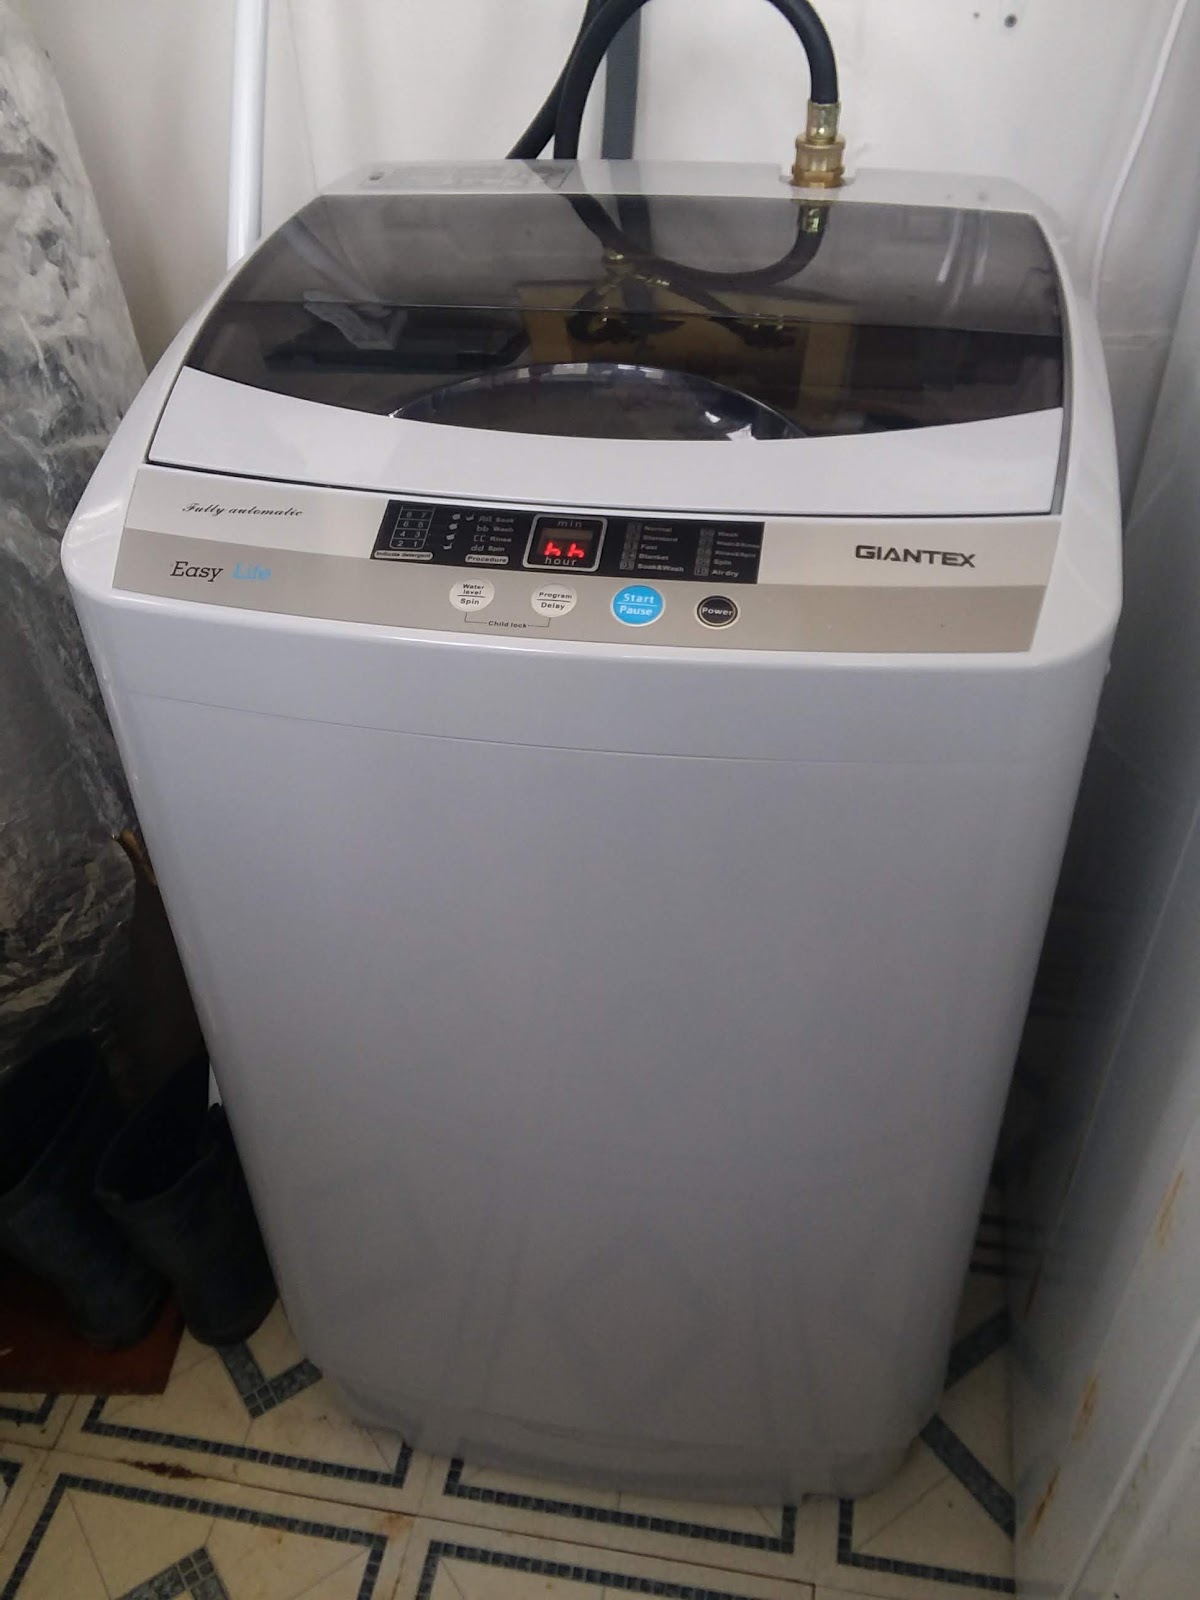 Through a Glass, Darkly: My Giantex Easy Life Washing Machine